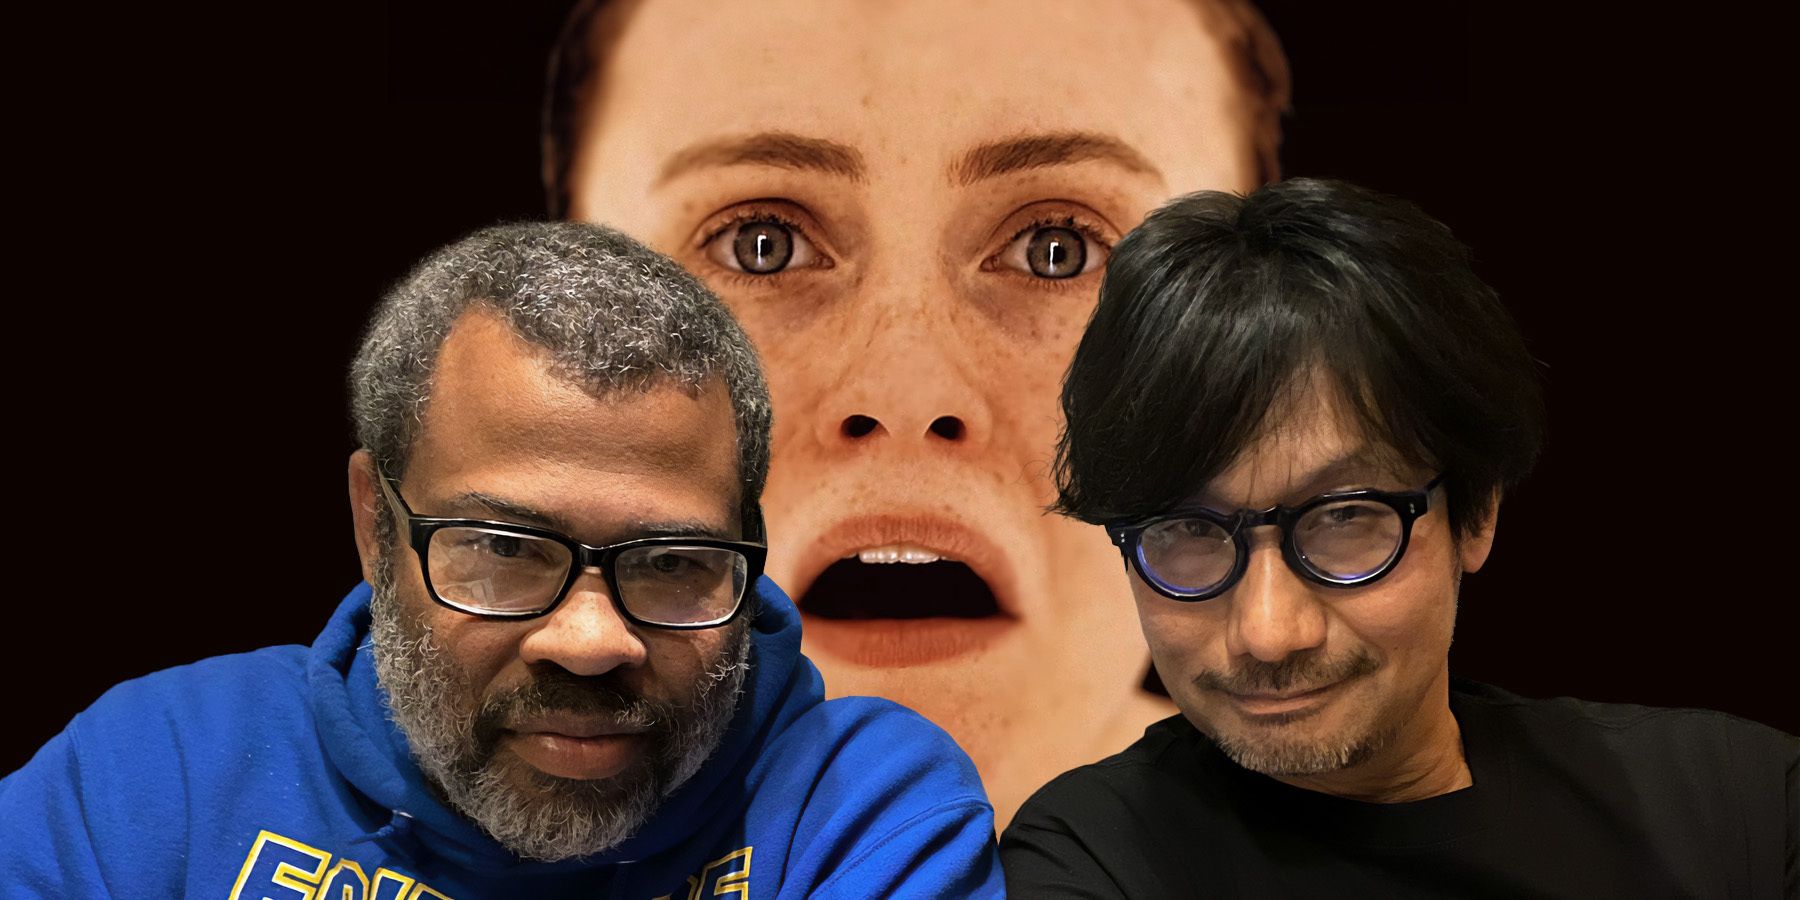 Jordan Peele and Hideo Kojima are collaborating on a horror game